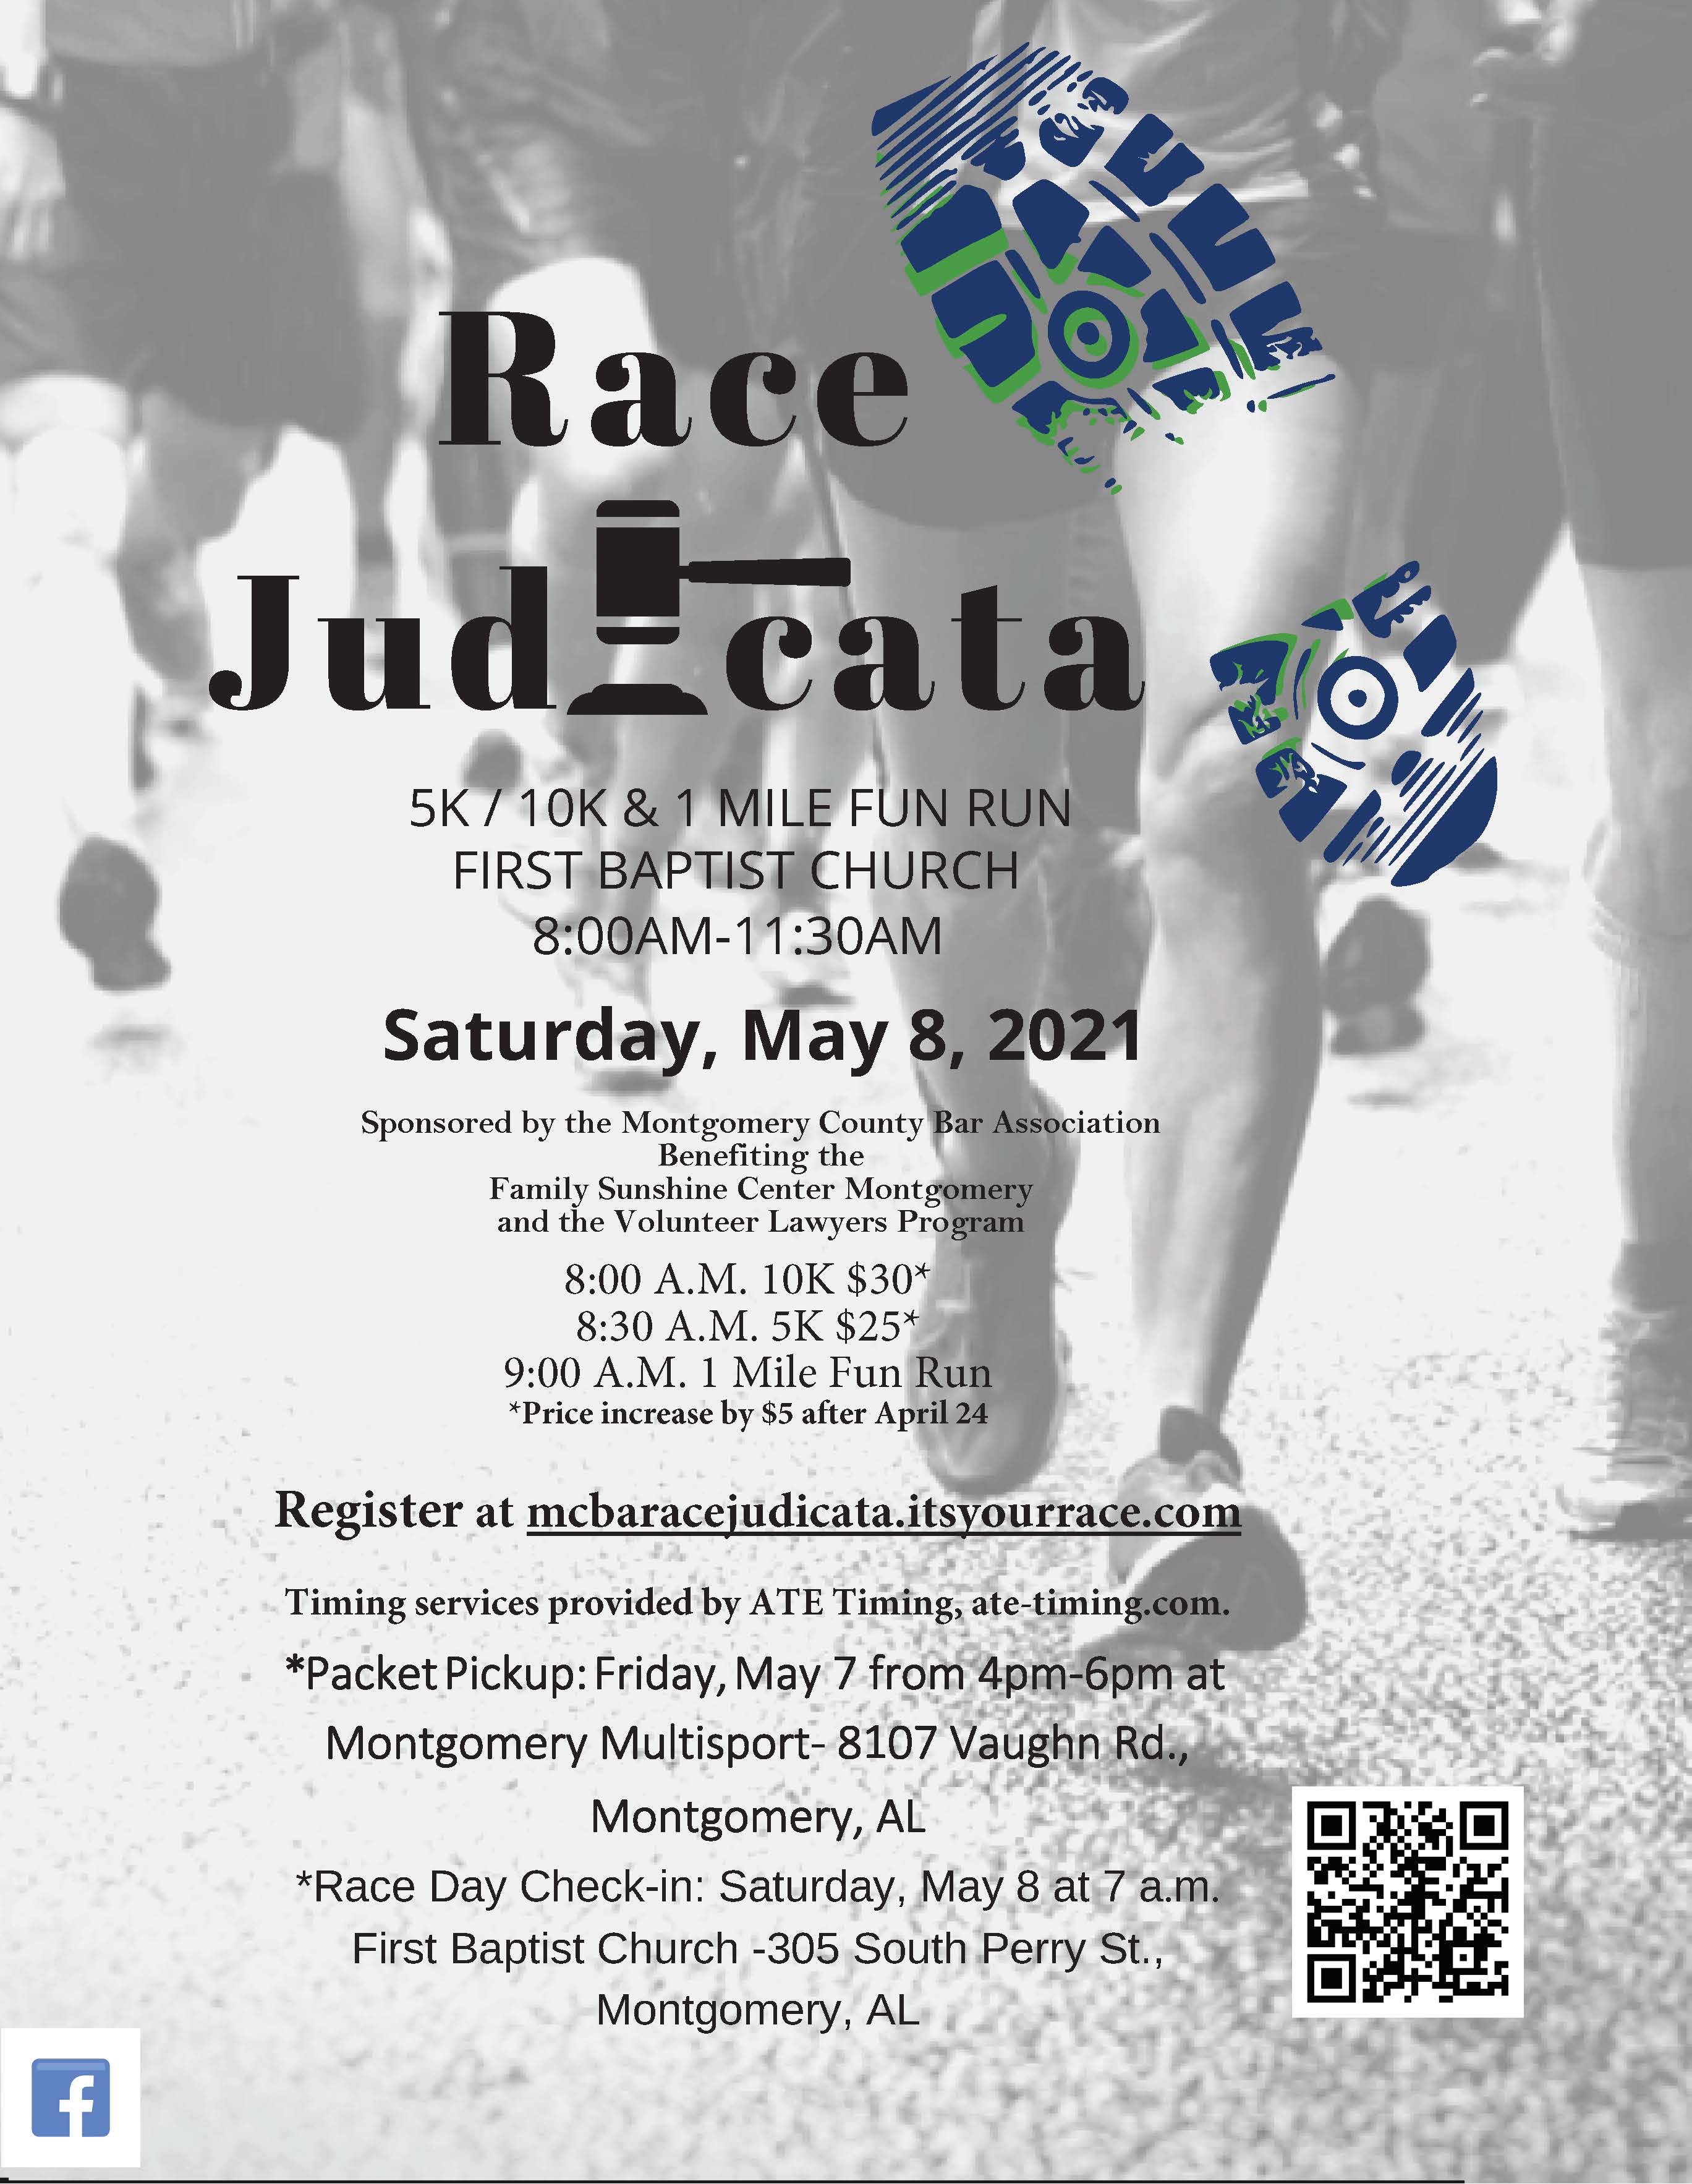 Montgomery County Bar Association Race Judicata in MONTGOMERY, AL